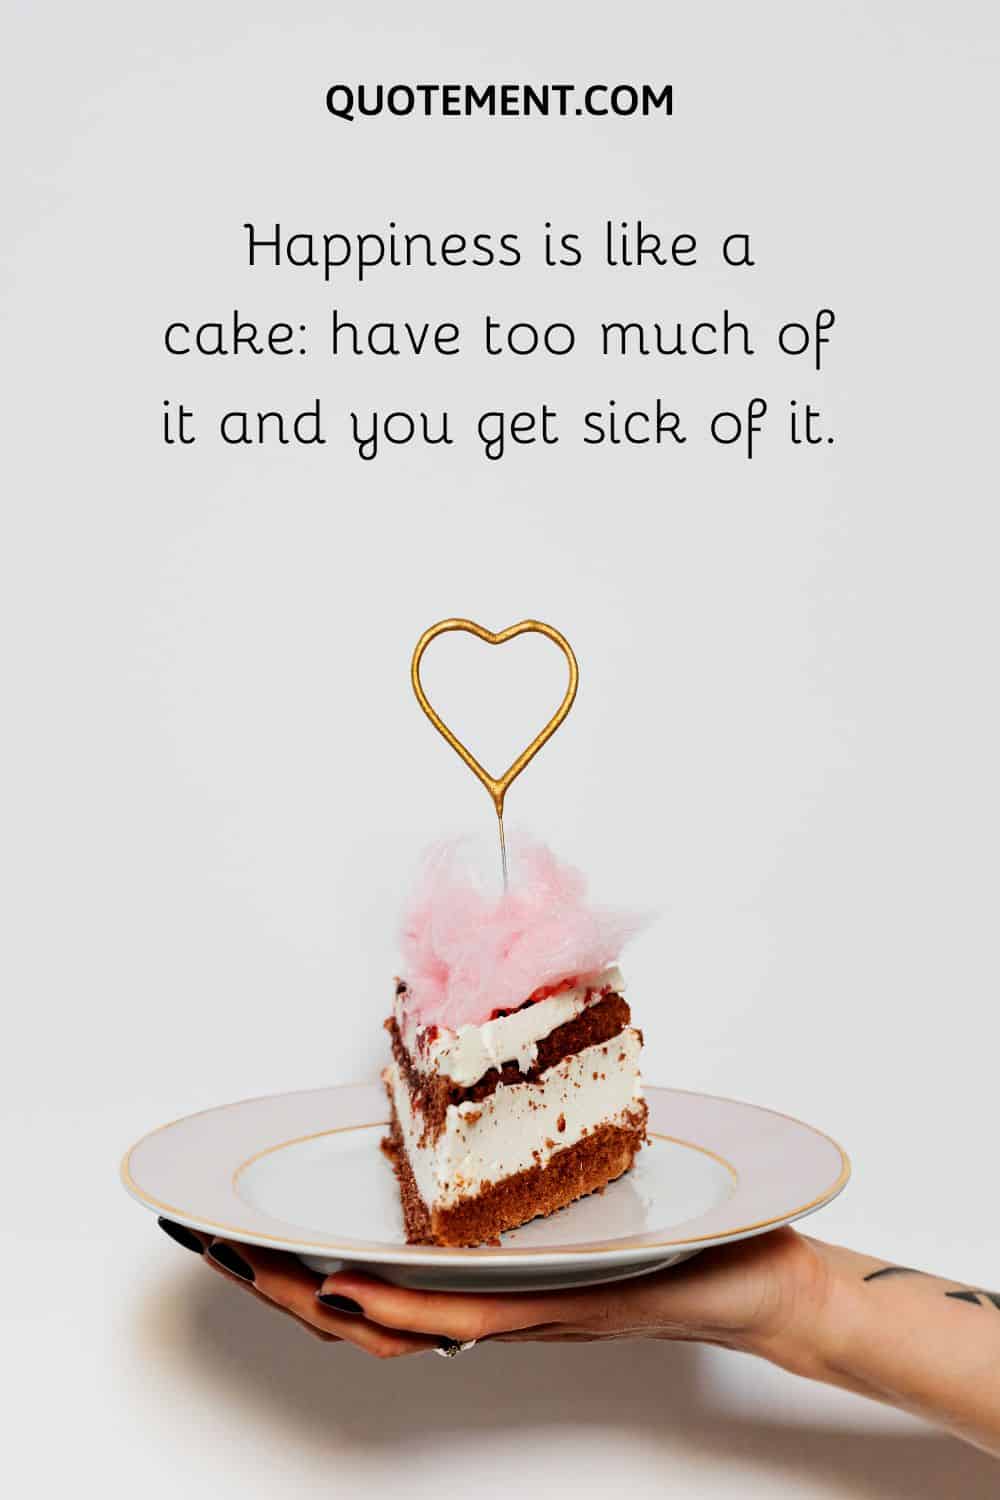 Happiness is like a cake